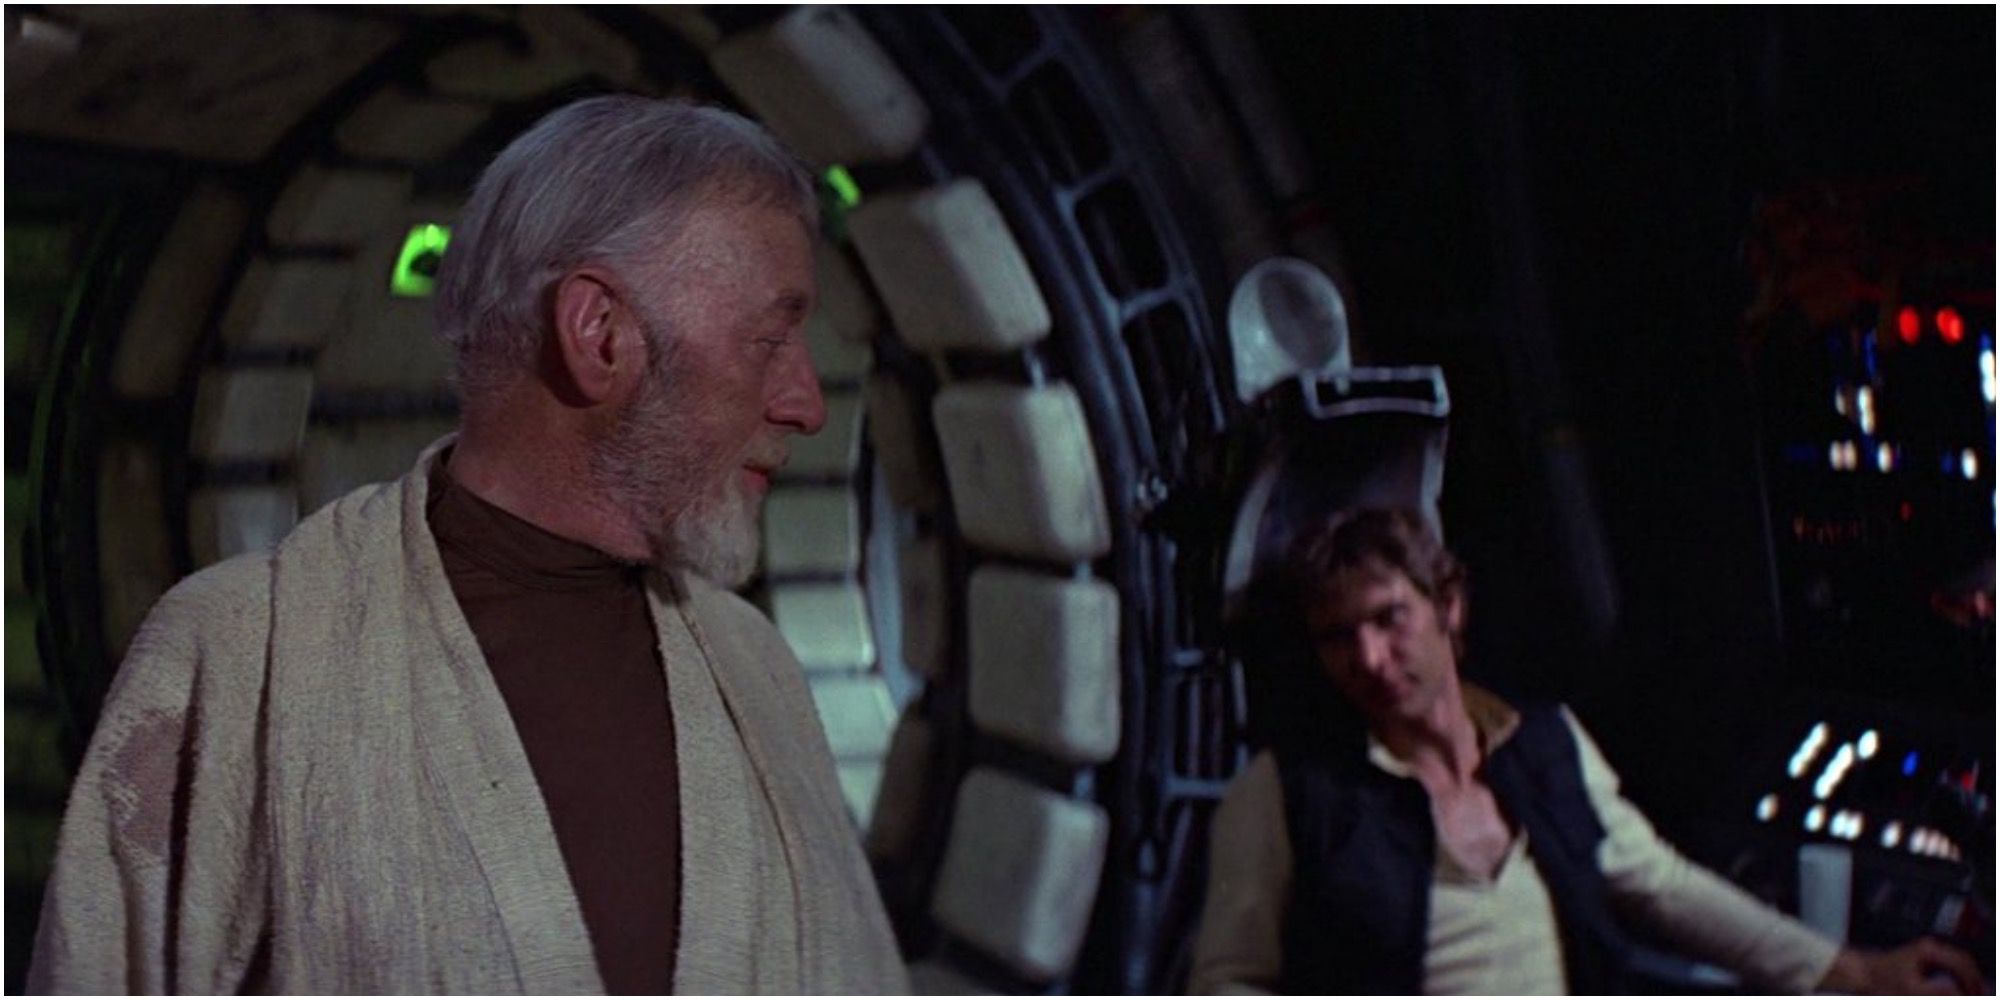 Obi-Wan talks to Han Solo while training Luke on the Millennium Falcon